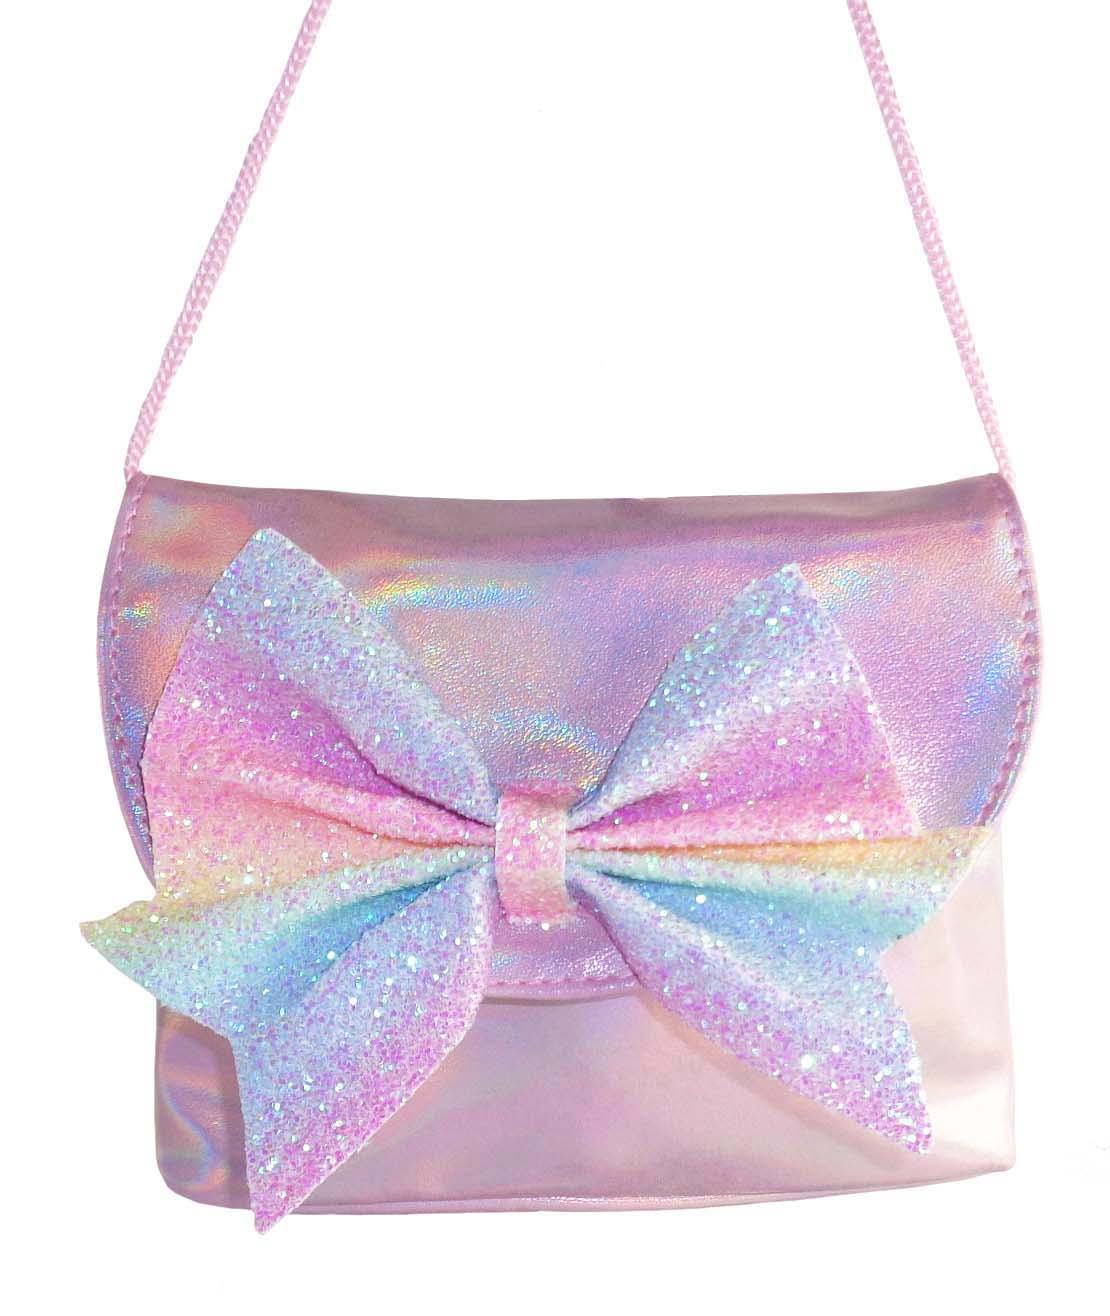 Childrens pink sparkly handbag-6527